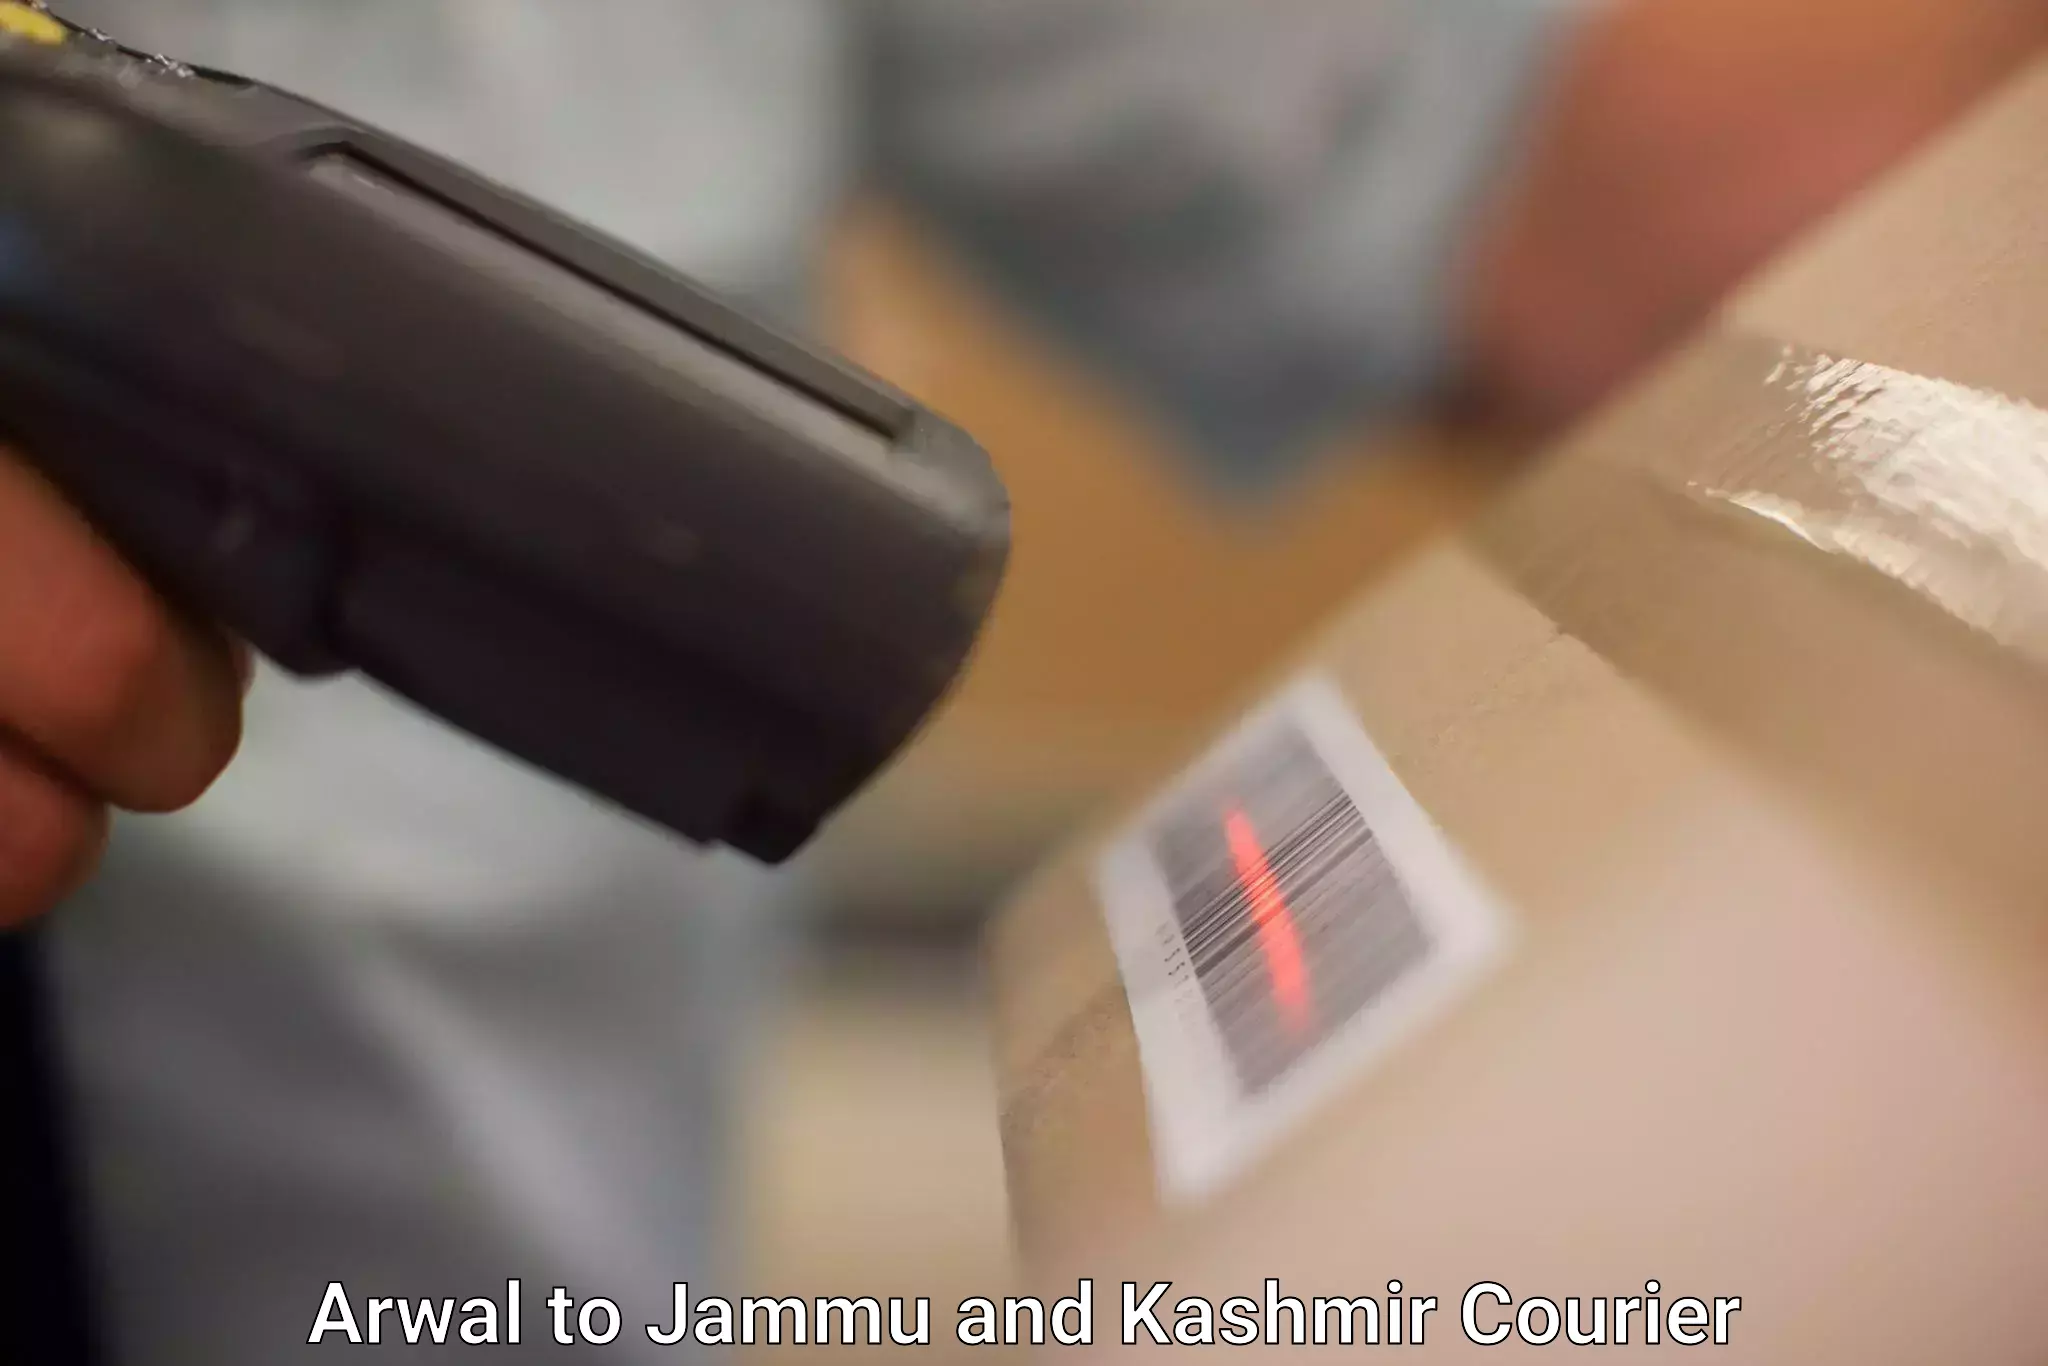 Flexible shipping options Arwal to University of Kashmir Srinagar